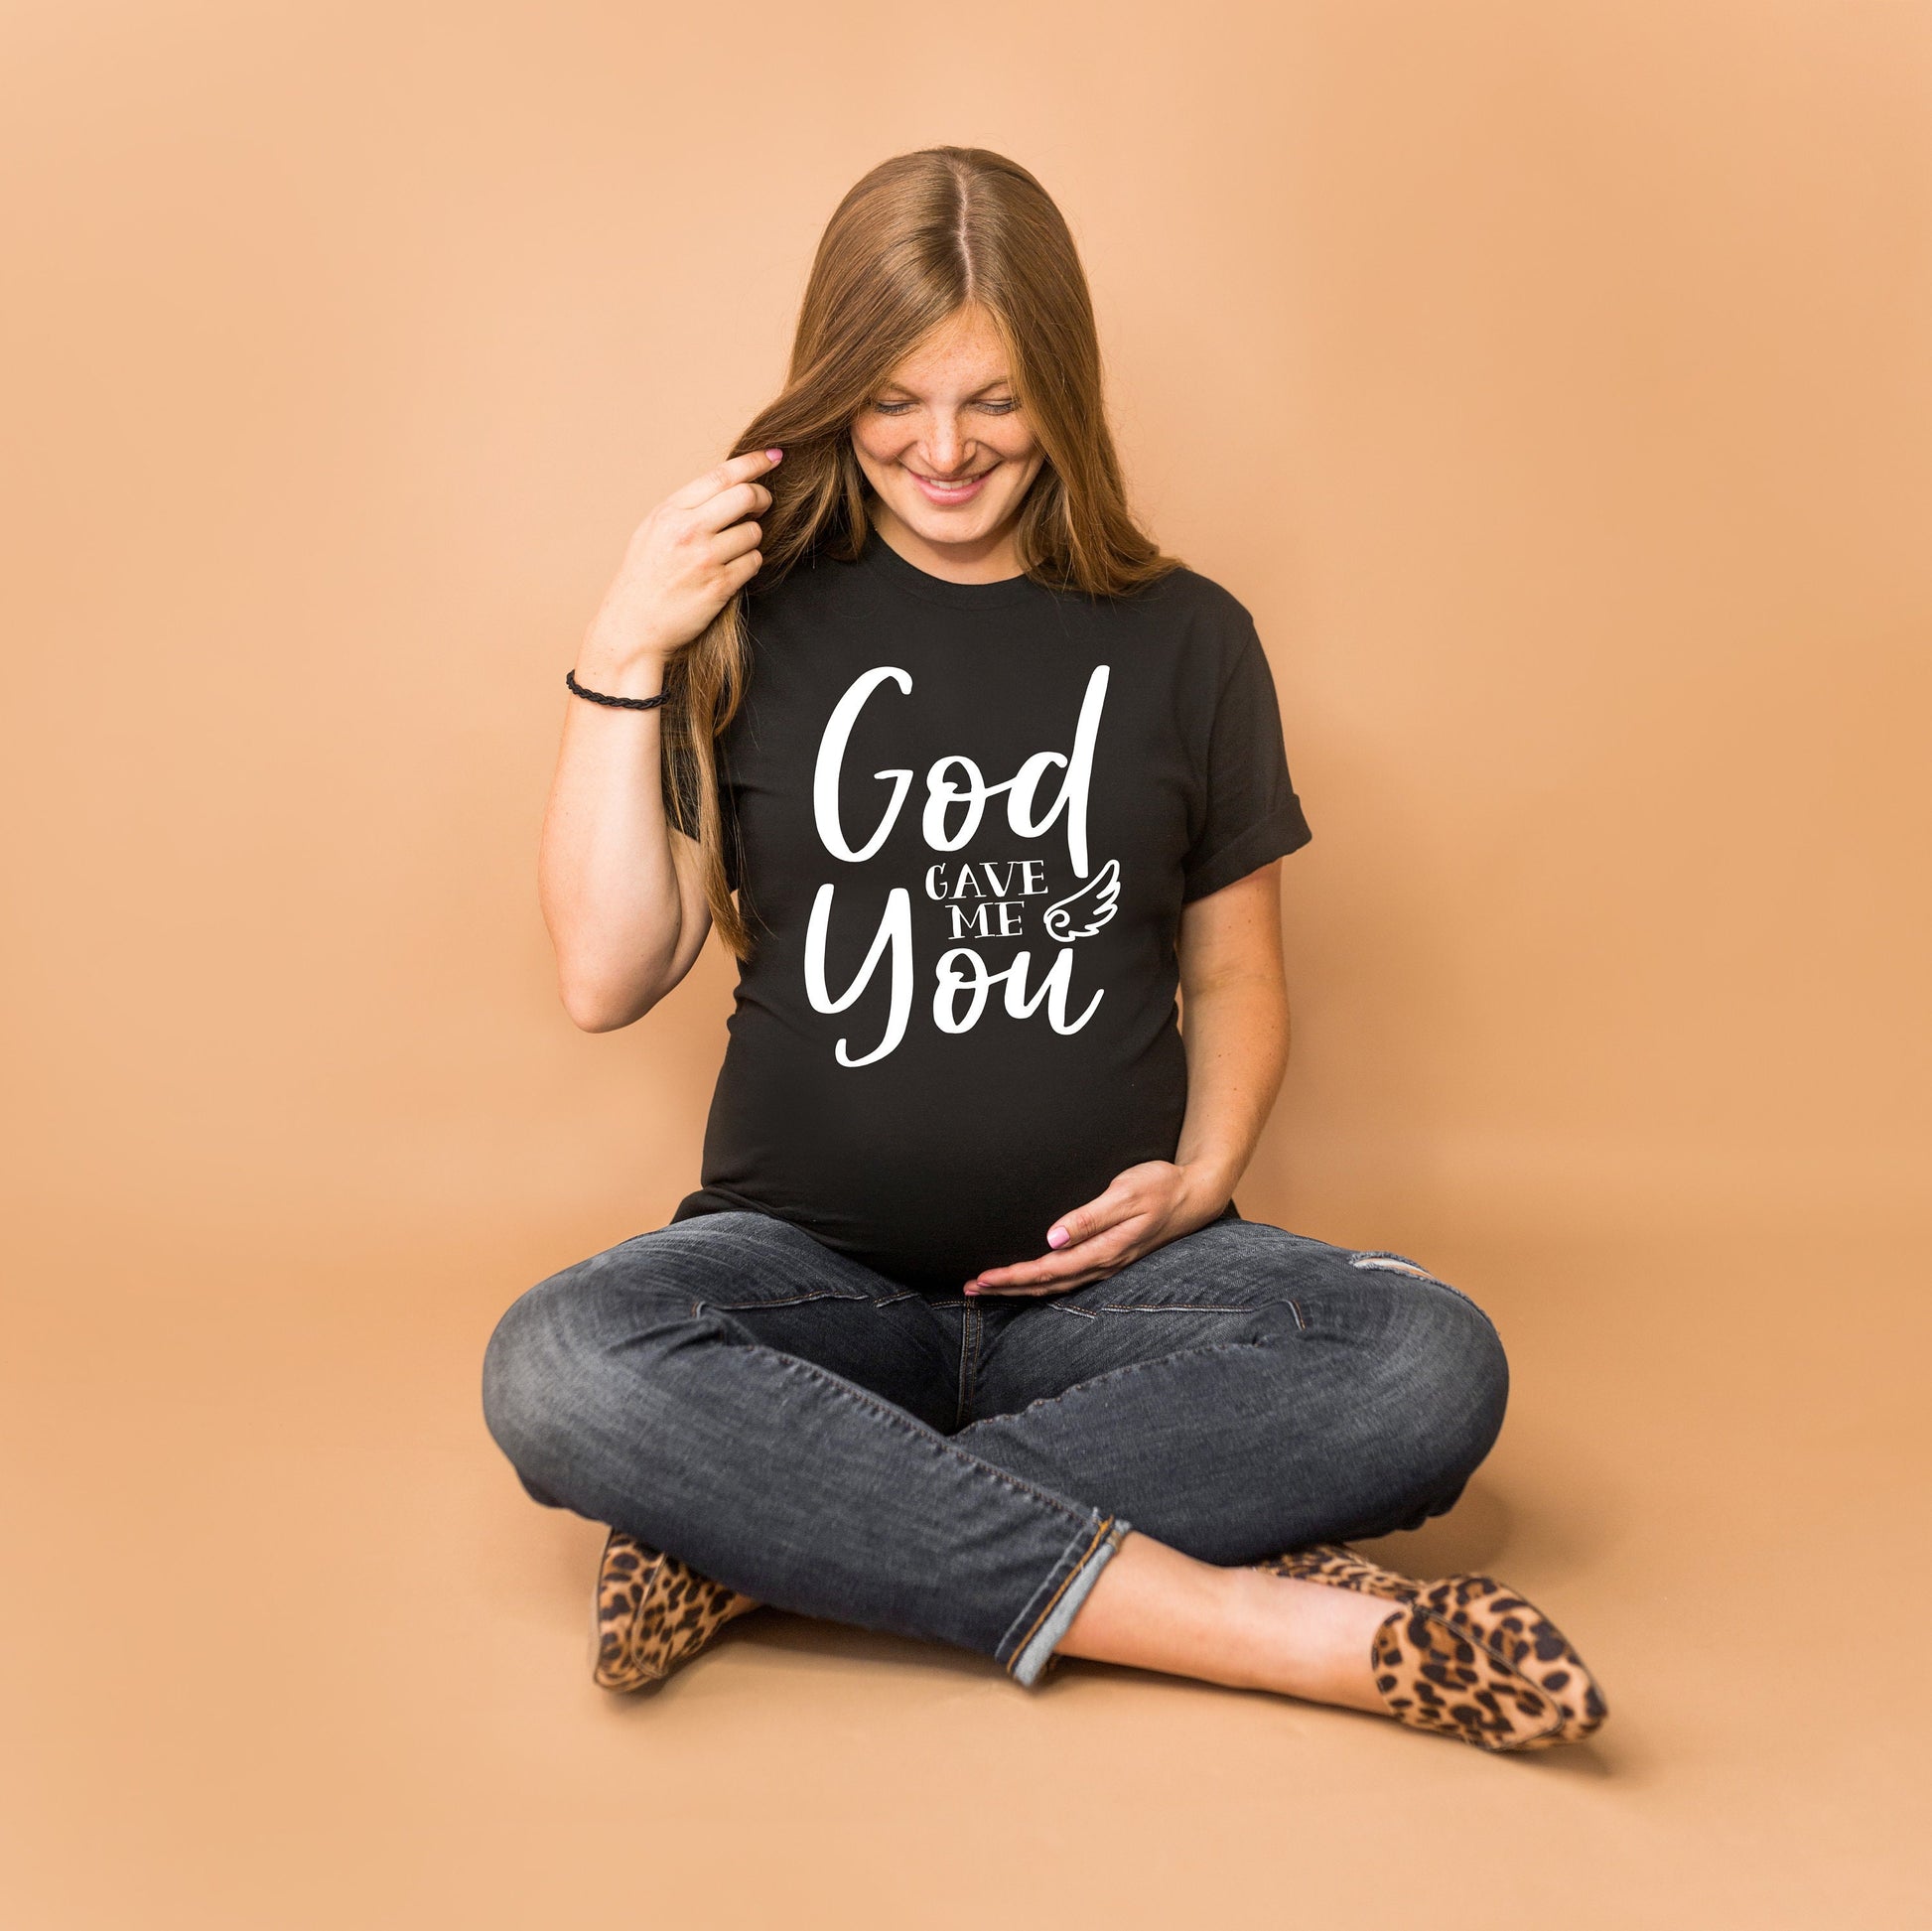 God Gave Me You t-shirt - pregnancy announcement shirt - pregnancy shirt - maternity shirt - christian t-shirt